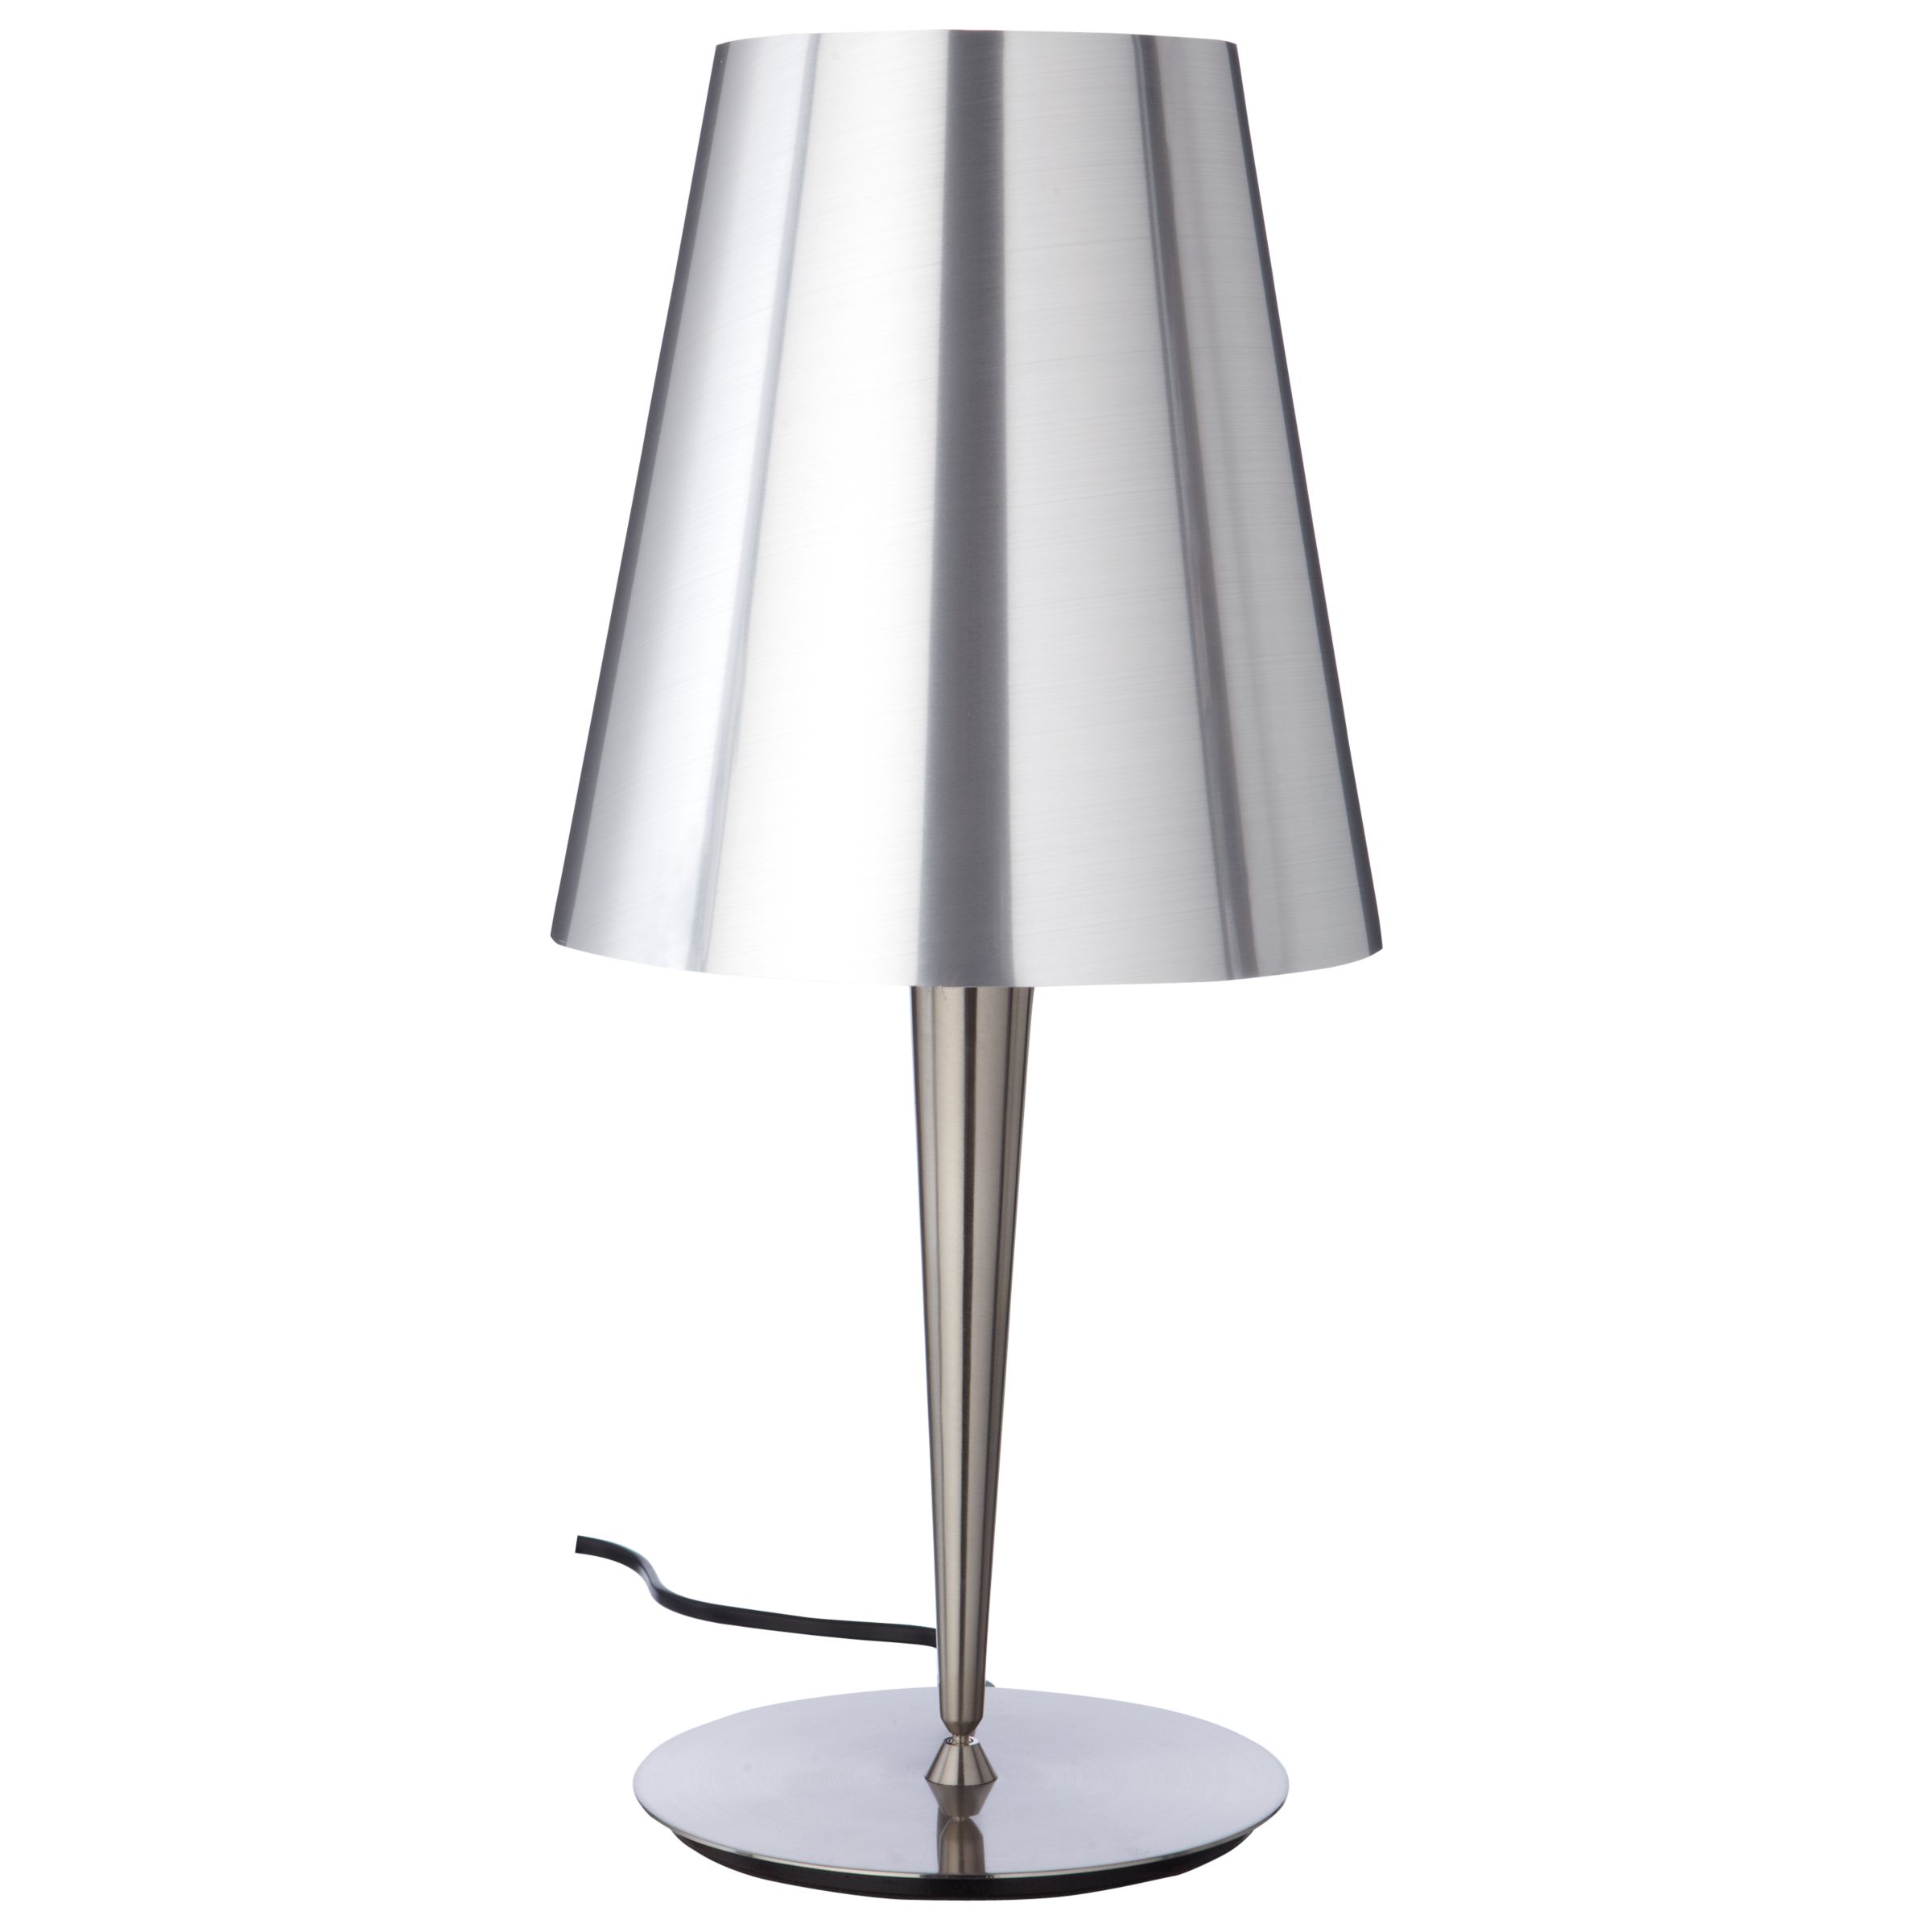 John Lewis Aimee Table Lamp, Chrome